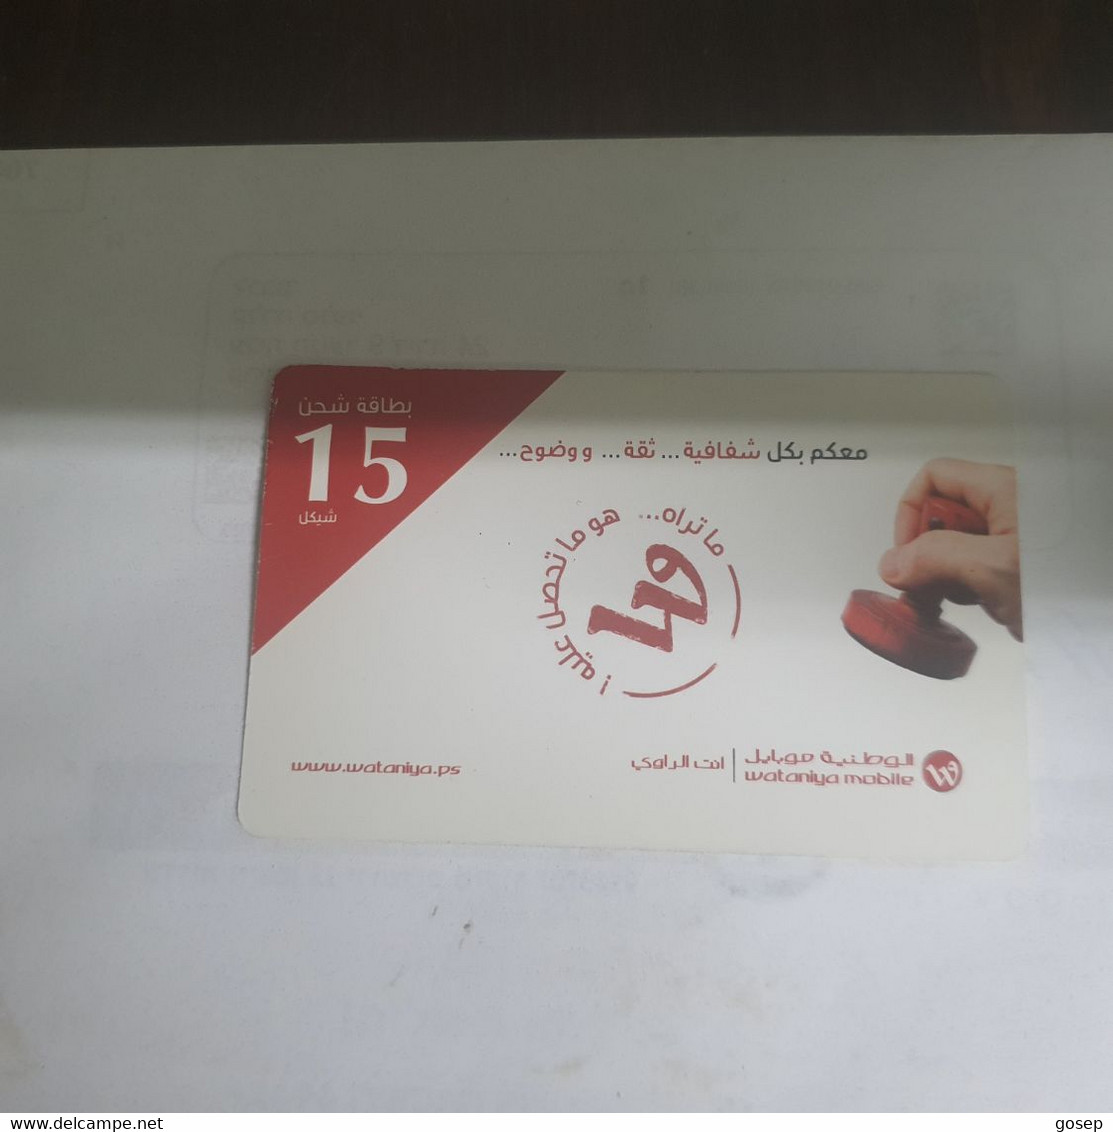 PALESTINE-(PS-WAT-REF-0005A)-Mobile 15-(377)-(3895-4858-8059-2506)-(1/8/2014)used Card+1prepiad Free - Palestine